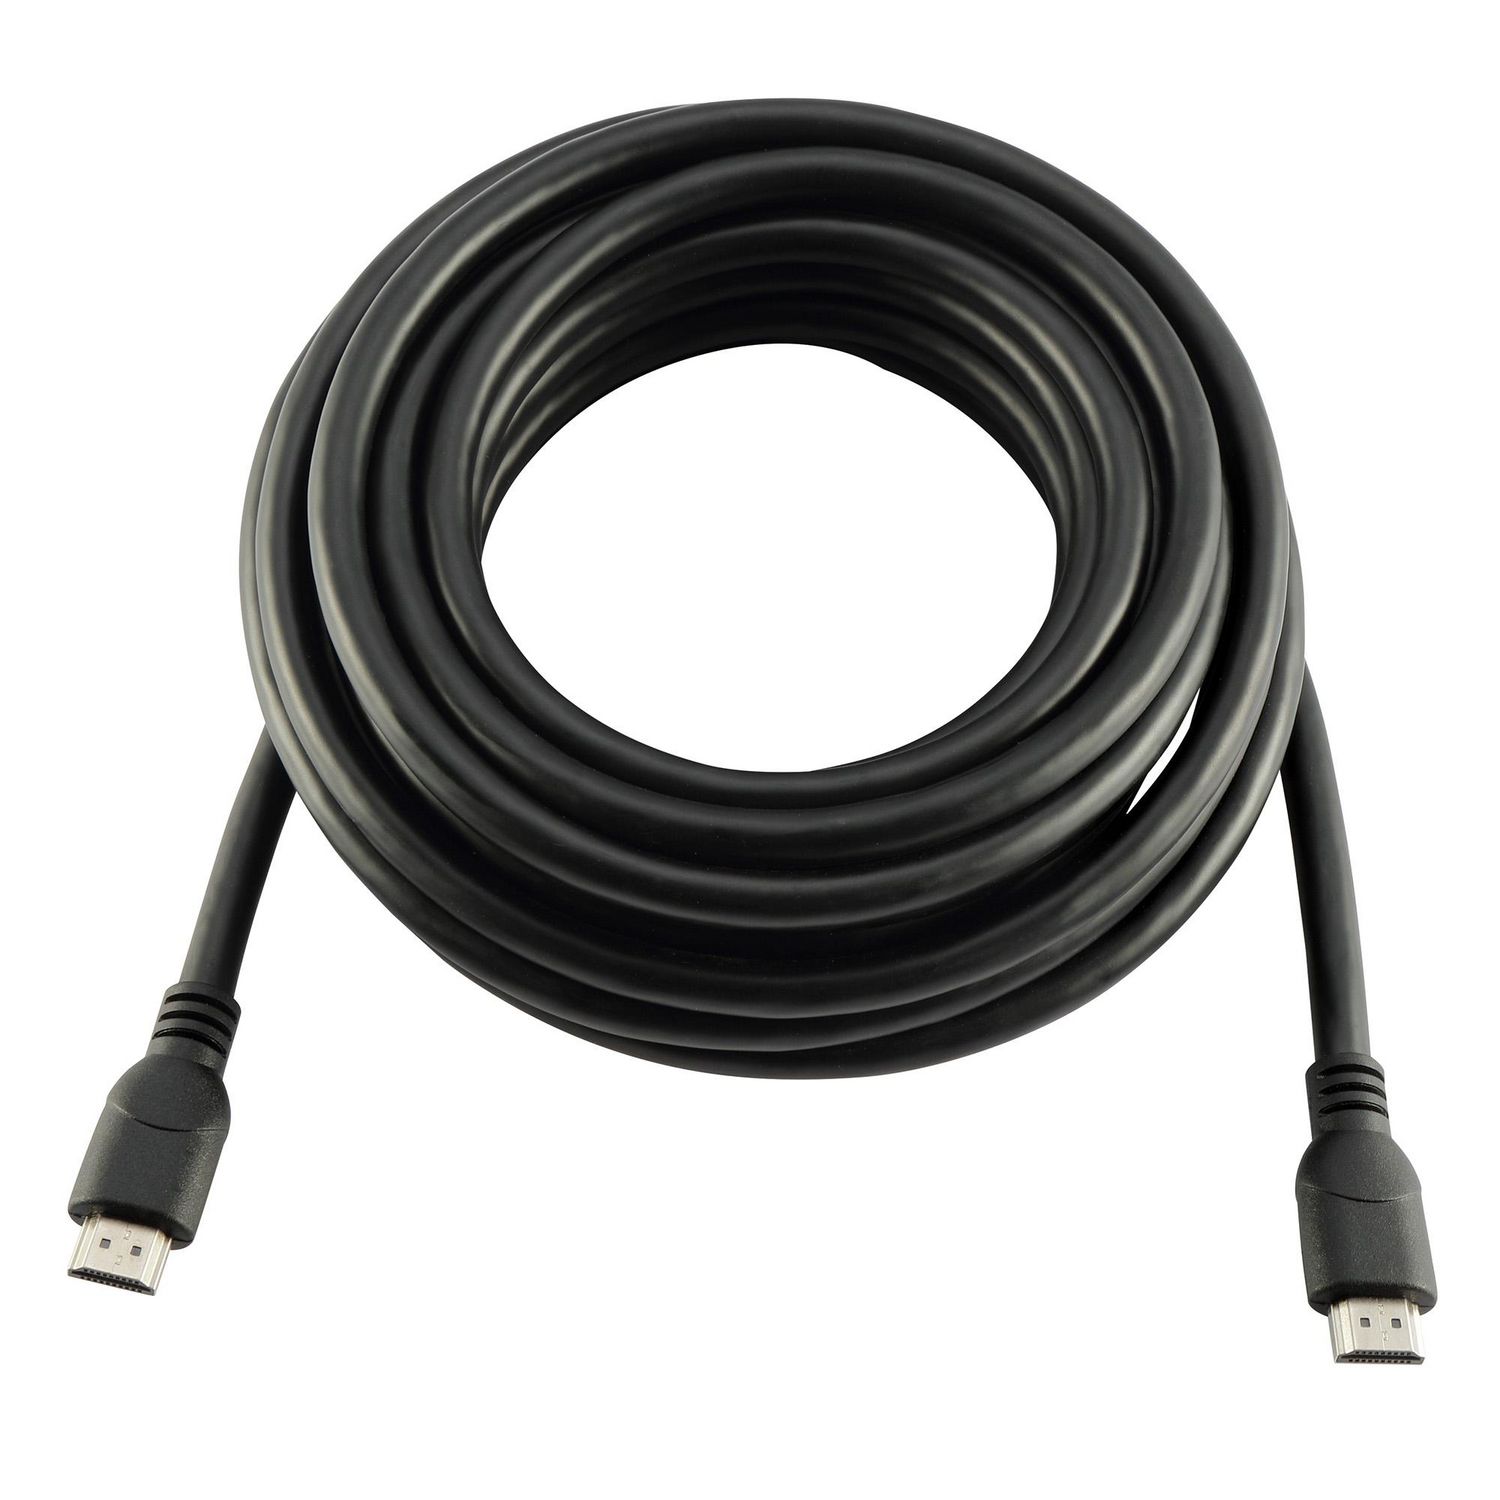 blackweb 25 FT High Speed HDMI Cable (Black) 